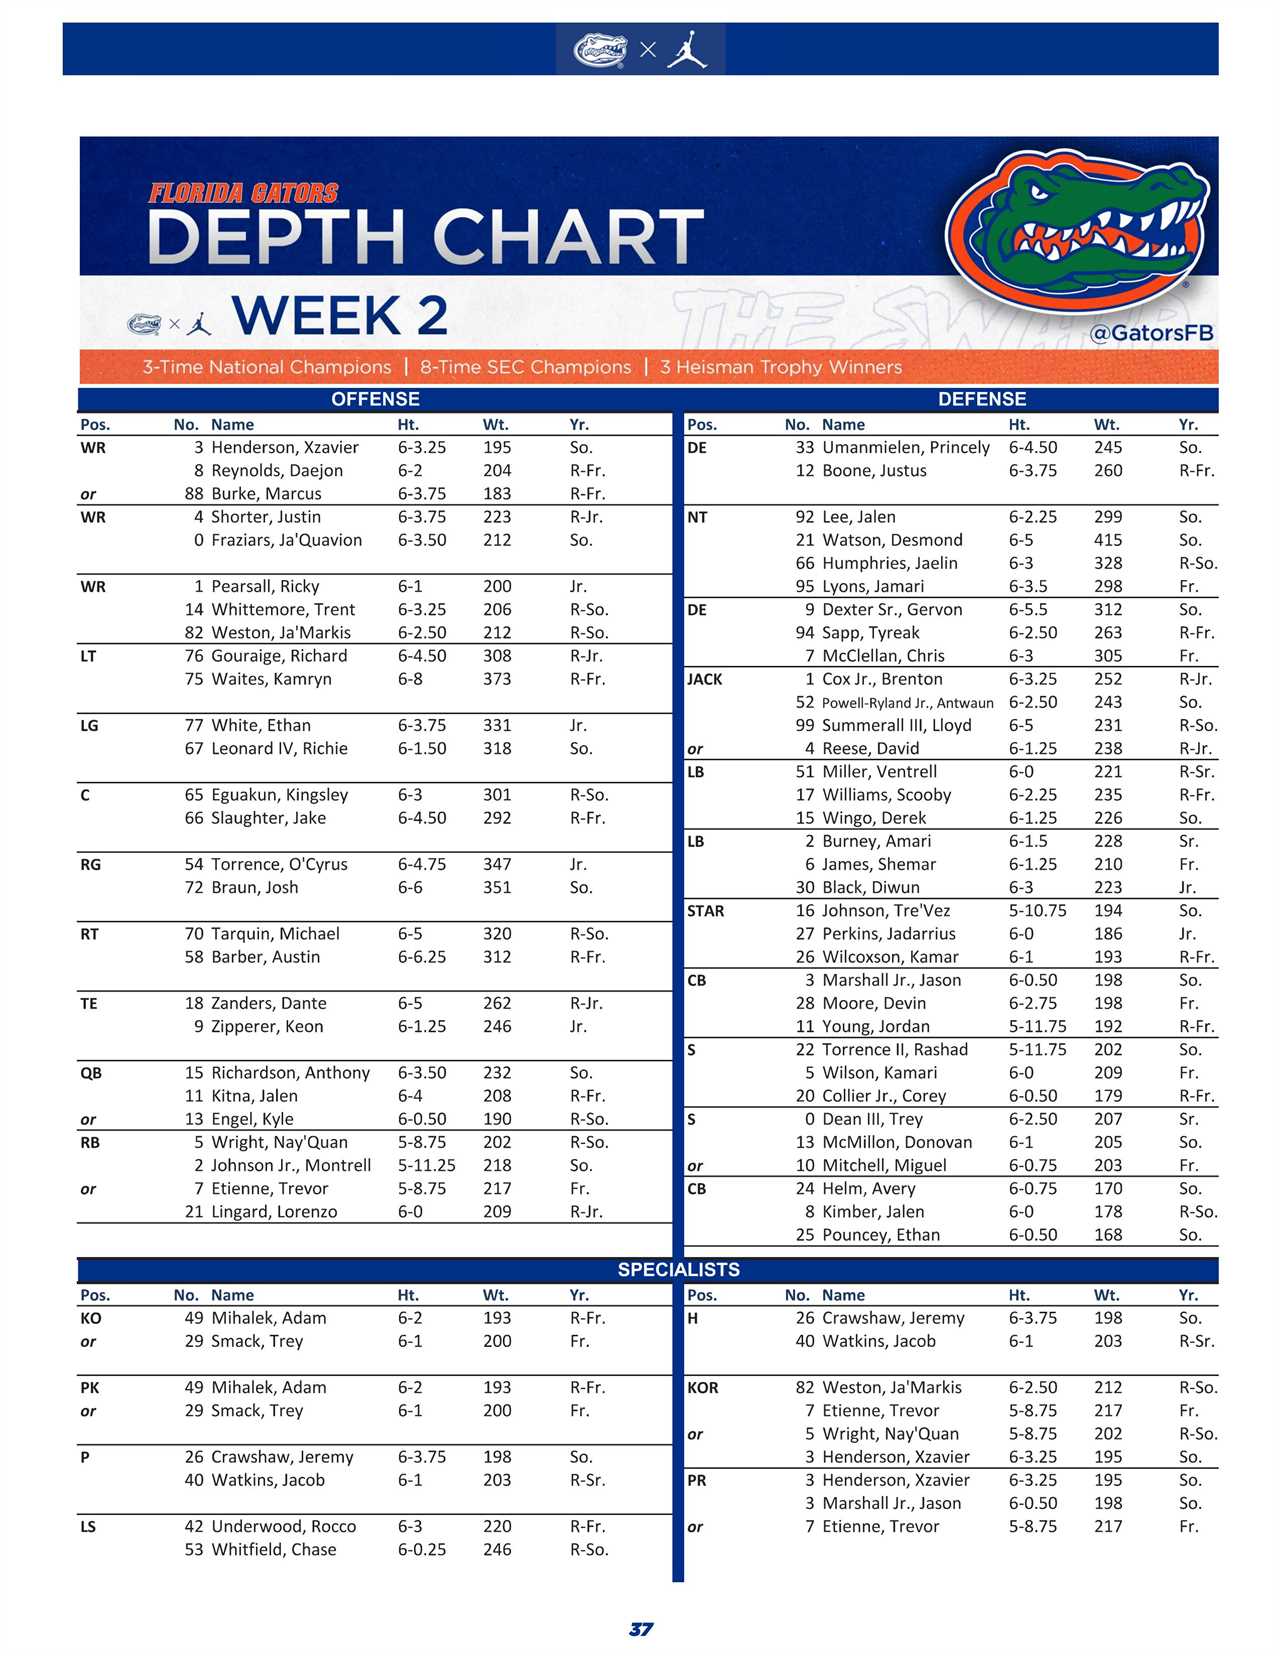 Florida updates depth chart ahead of week 2 matchup with Kentucky